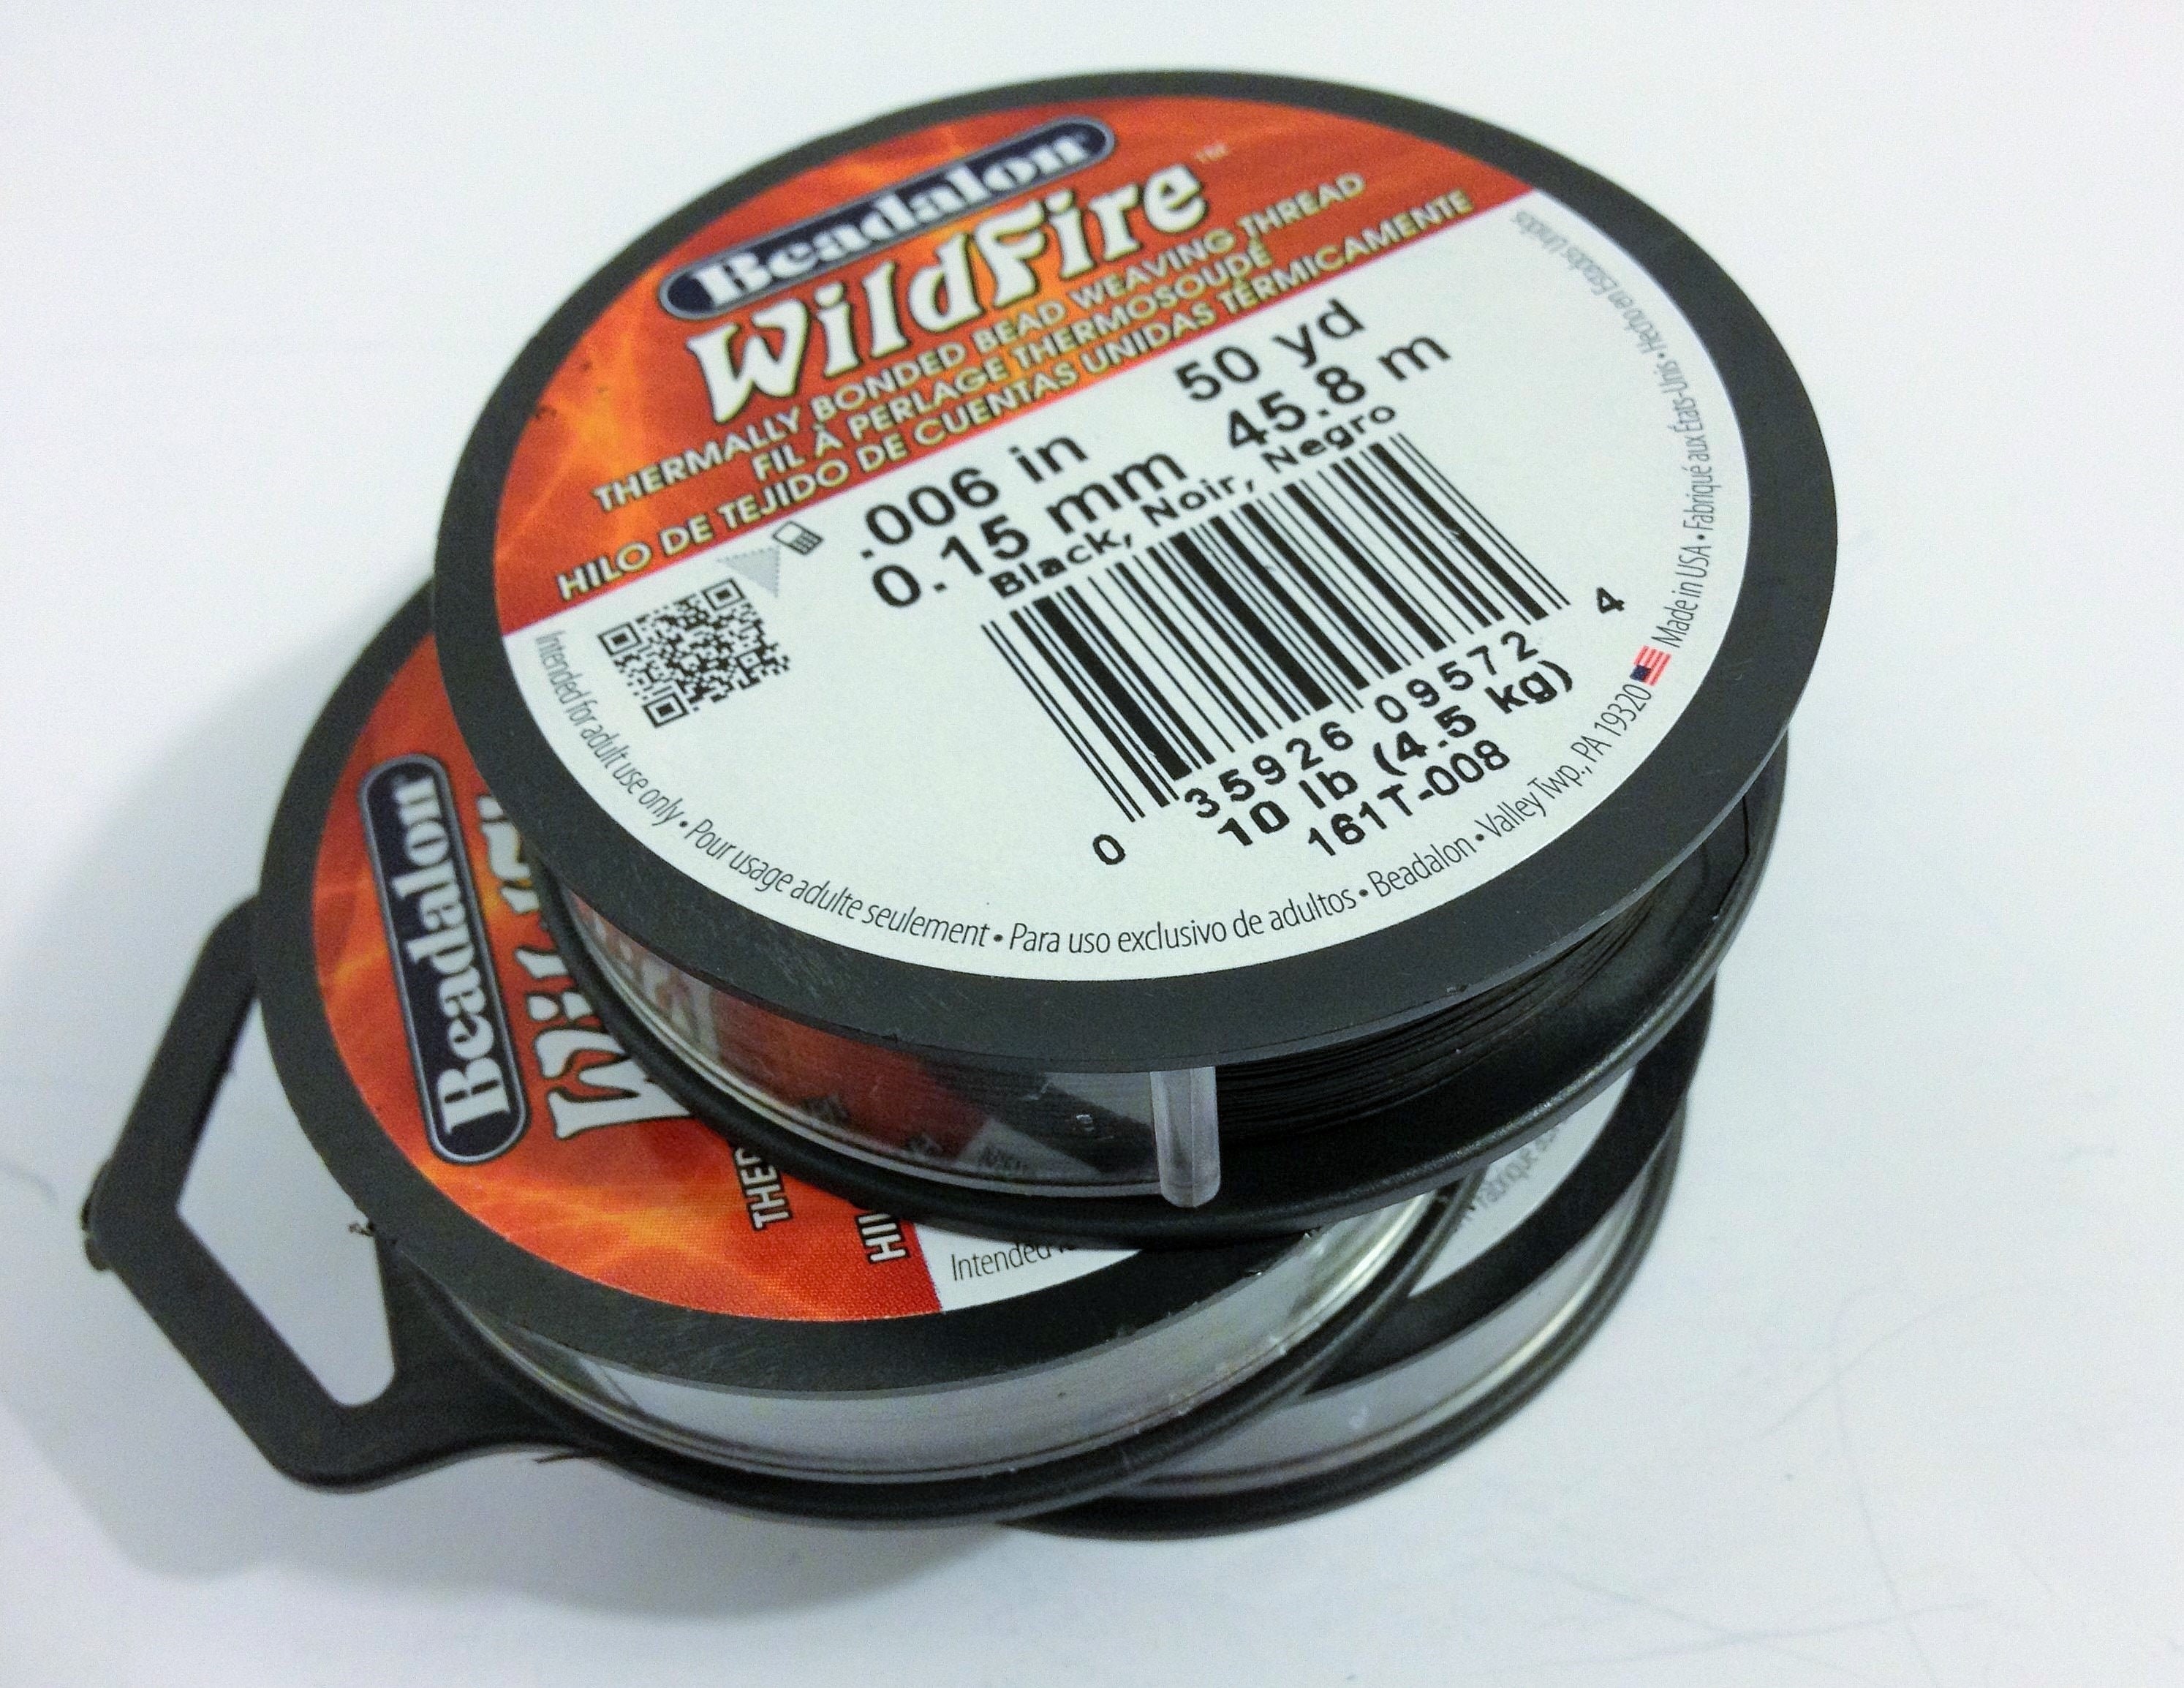 Wildfire Thread Grey .006 20 yards - Jewel Loom